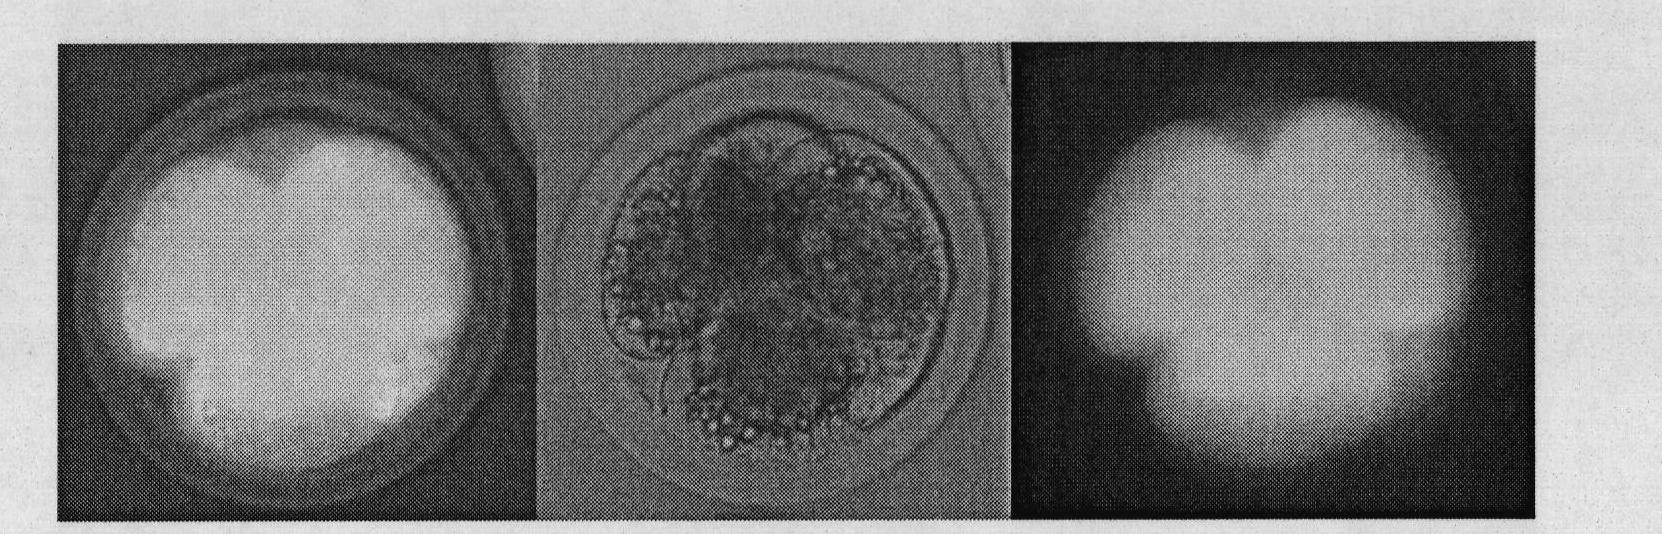 Method for producing transgenic buffalo embryos by applying intracytoplasmic sperm injection (ICSI) mediation